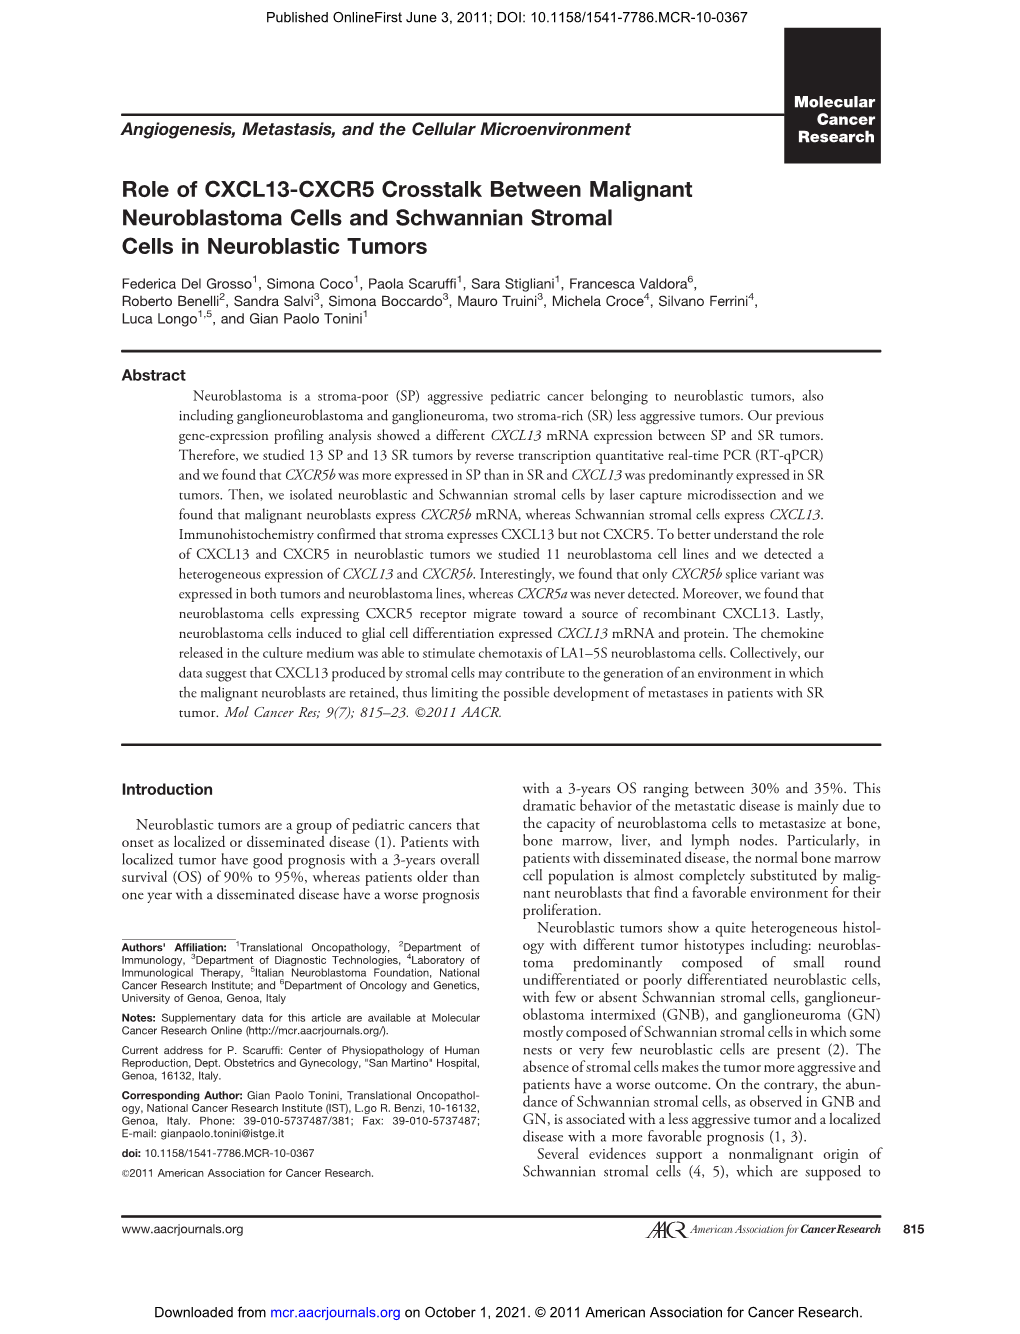 Role of CXCL13-CXCR5 Crosstalk Between Malignant Neuroblastoma Cells and Schwannian Stromal Cells in Neuroblastic Tumors